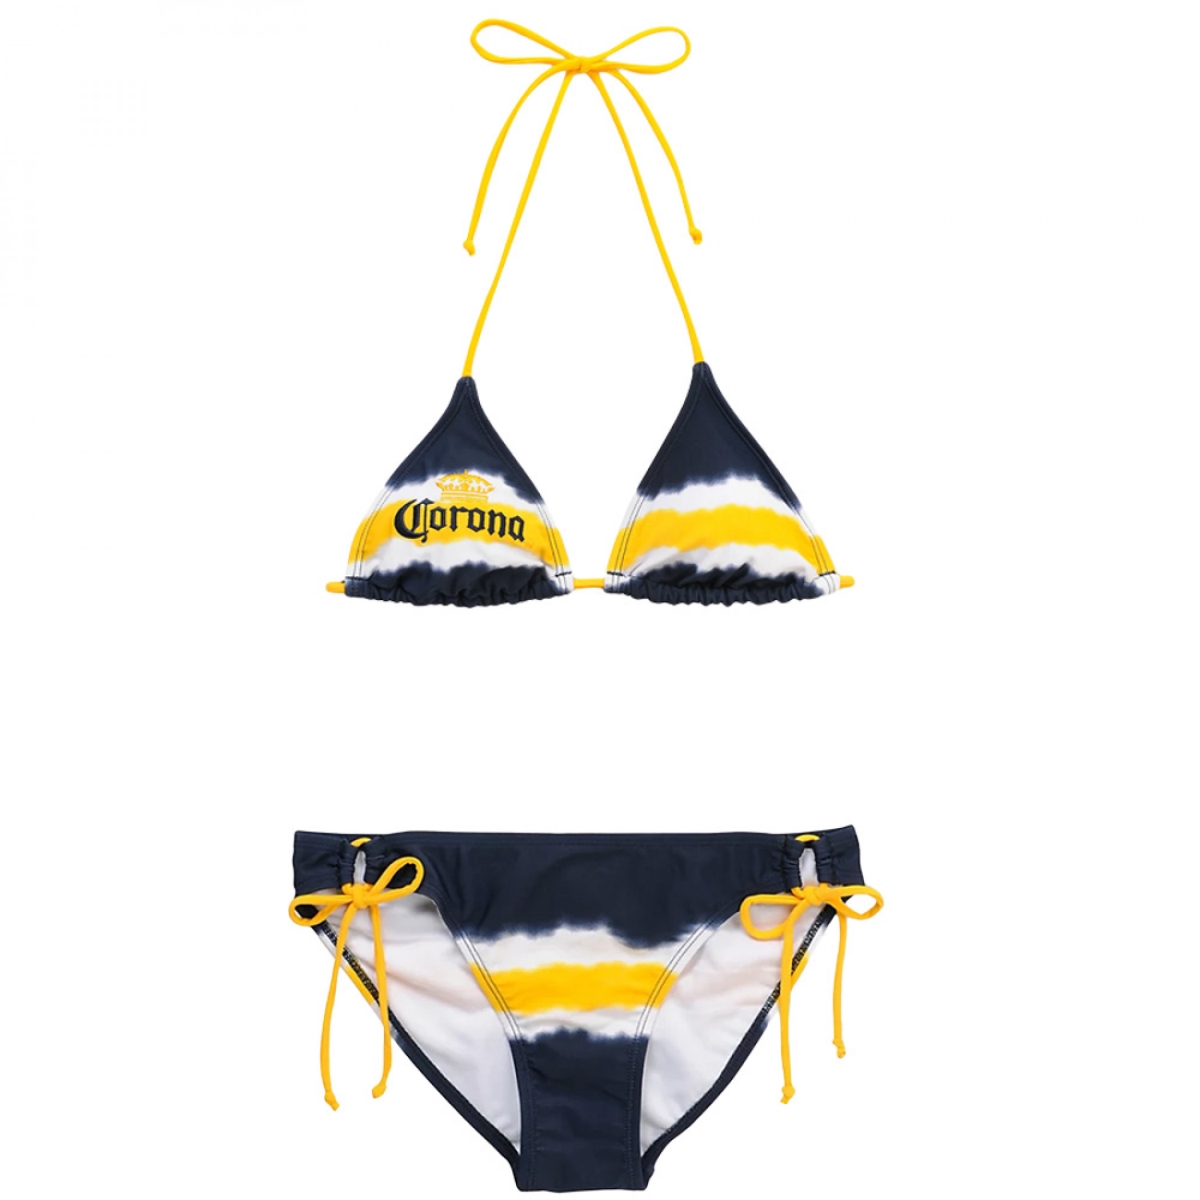 Picture of Corona Extra 837283-small Corona Extra Tie Dye Womens Swimsuit Bikini - Small